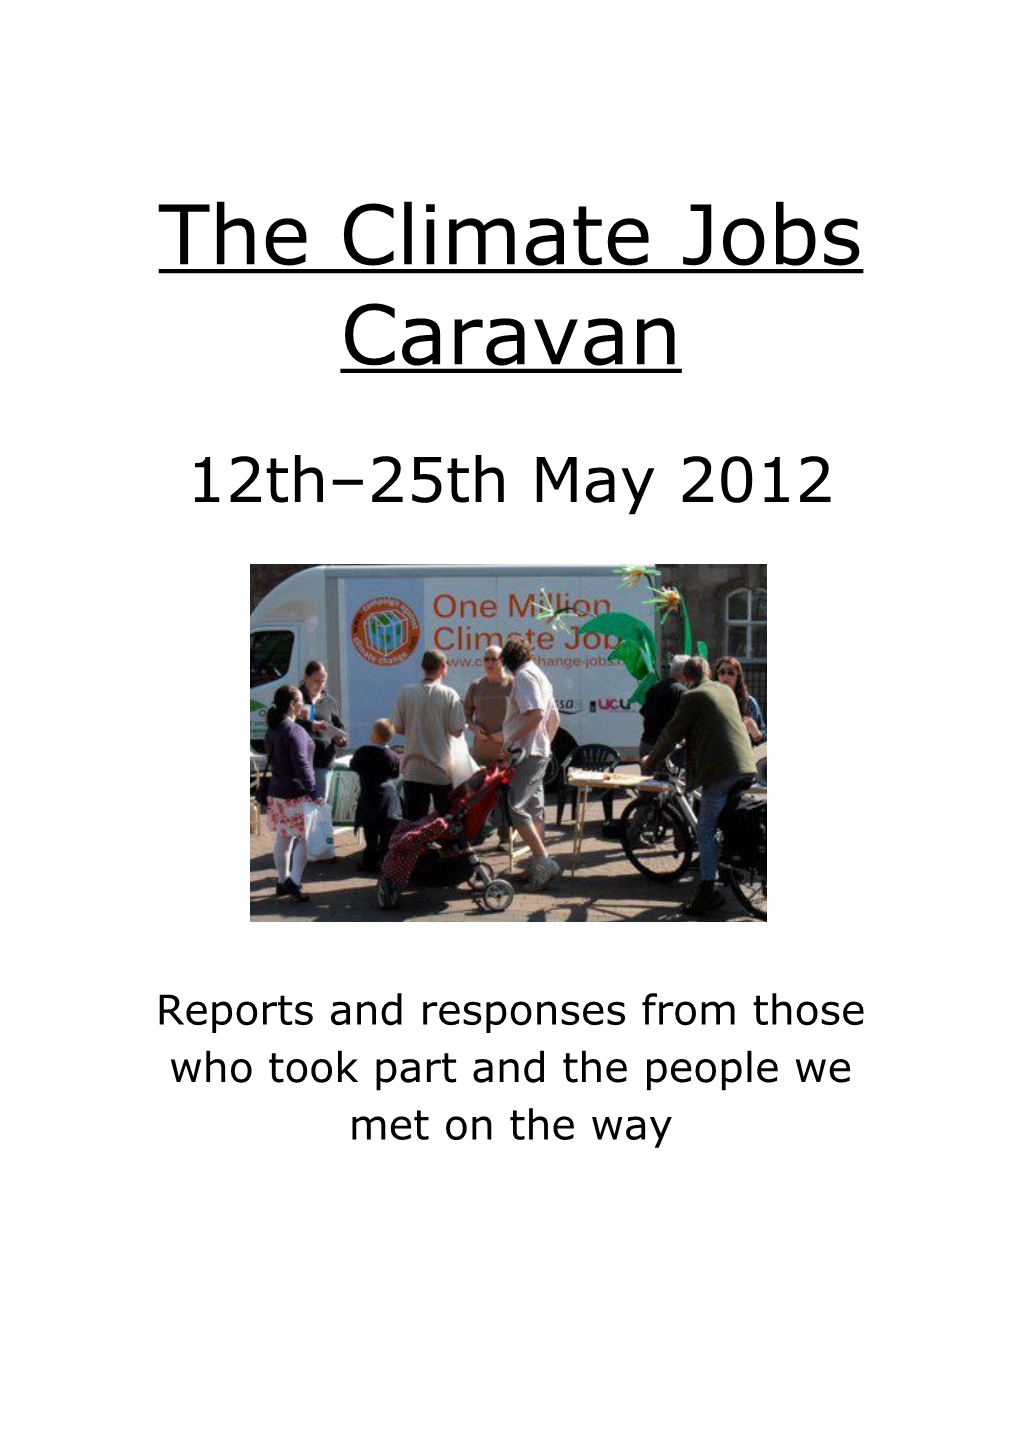 The Climate Jobs Caravan